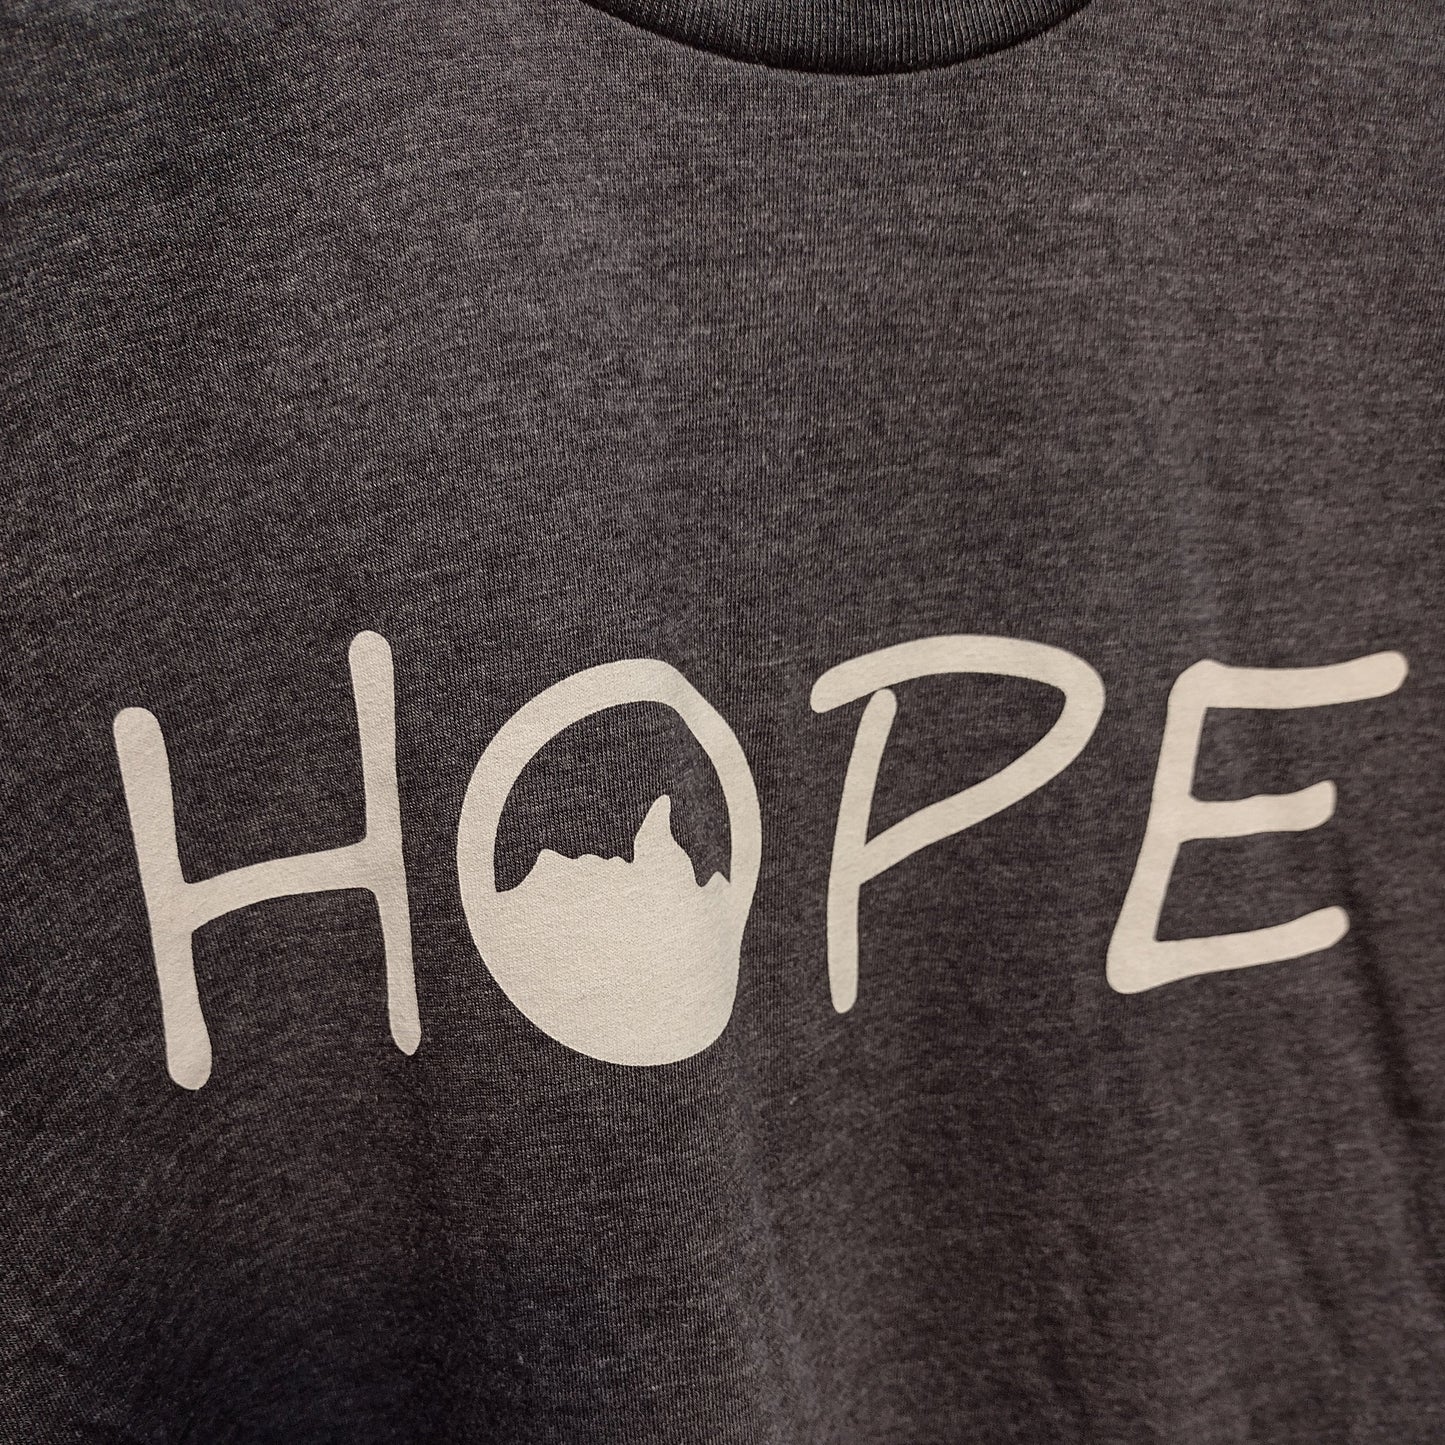 Hope Ministries International Official T-shirt